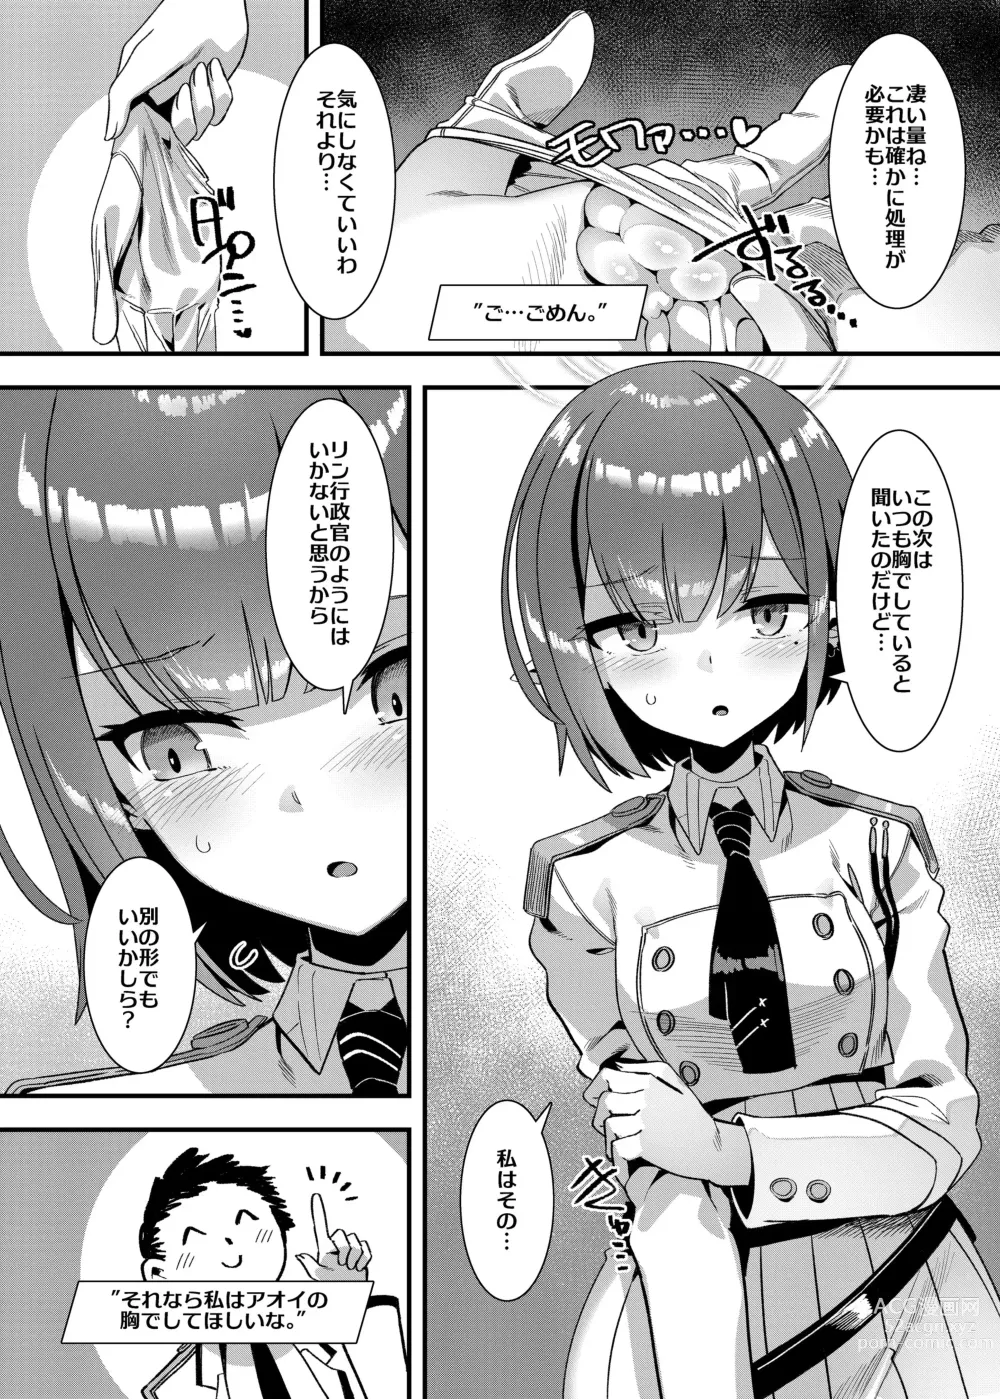 Page 8 of doujinshi Schale no Seiyoku Shori Gyoumu with Oki Aoi